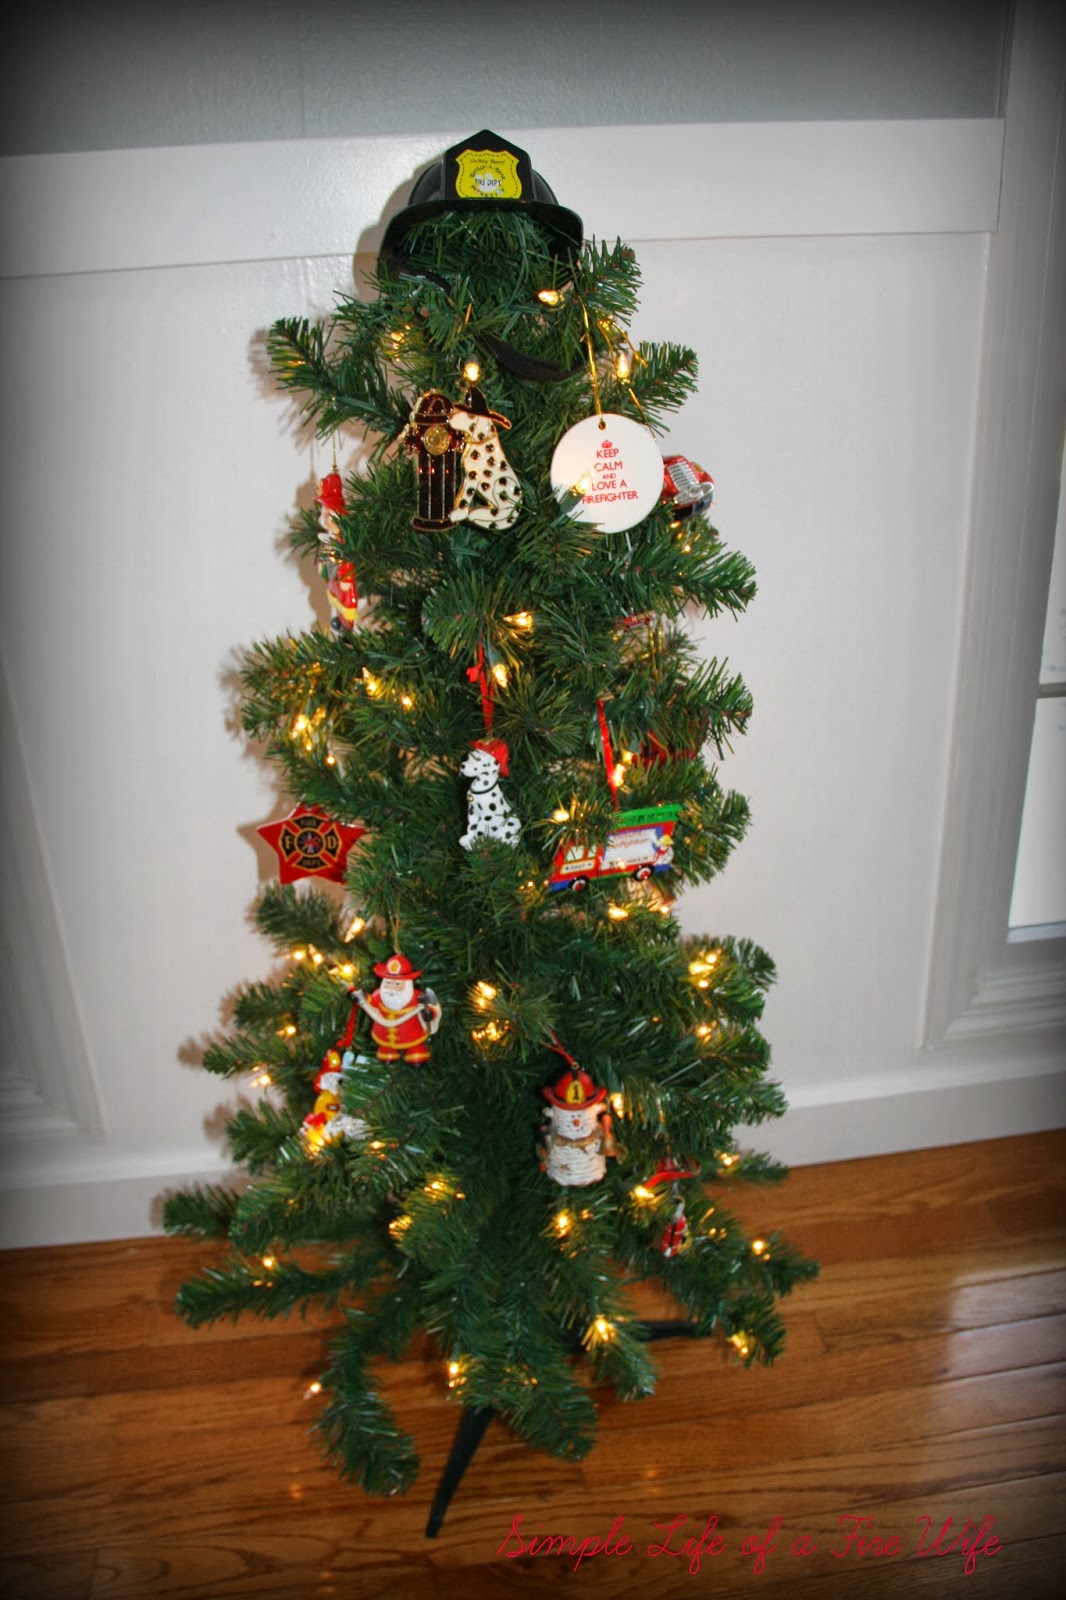 Whitehouse ornaments dildo